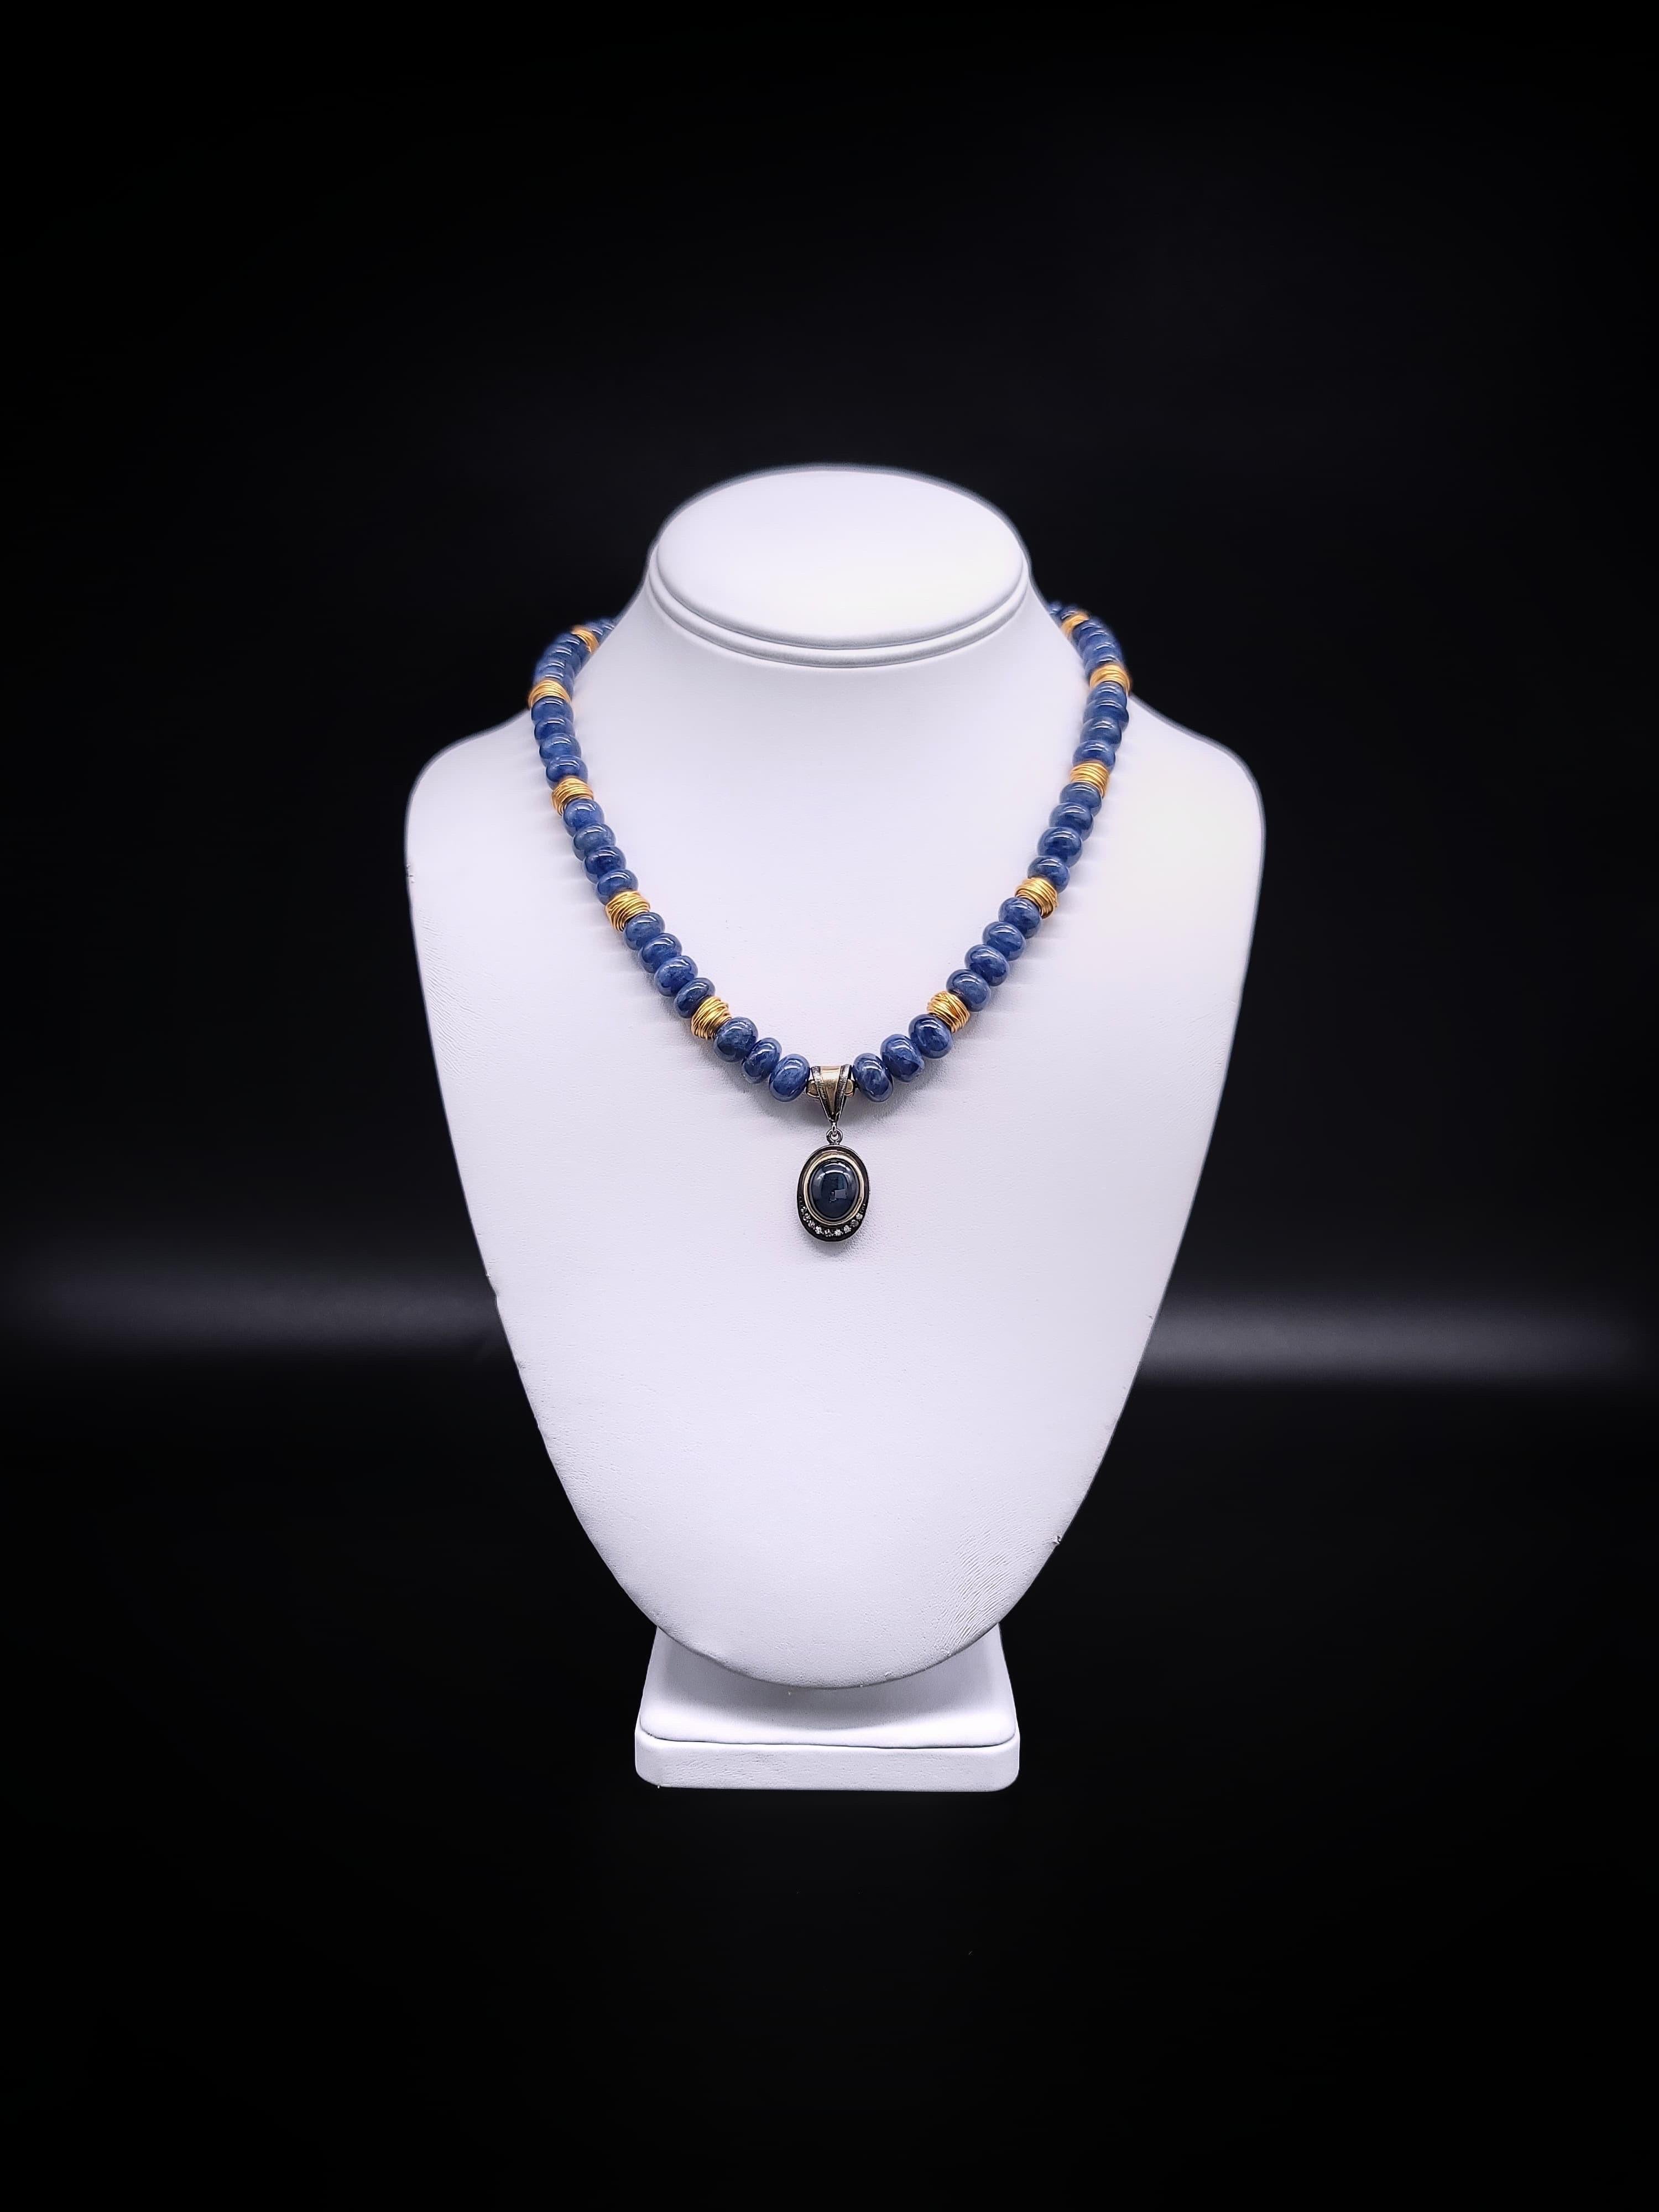 A.Jeschel Royal Blue Sapphire Necklace. 11